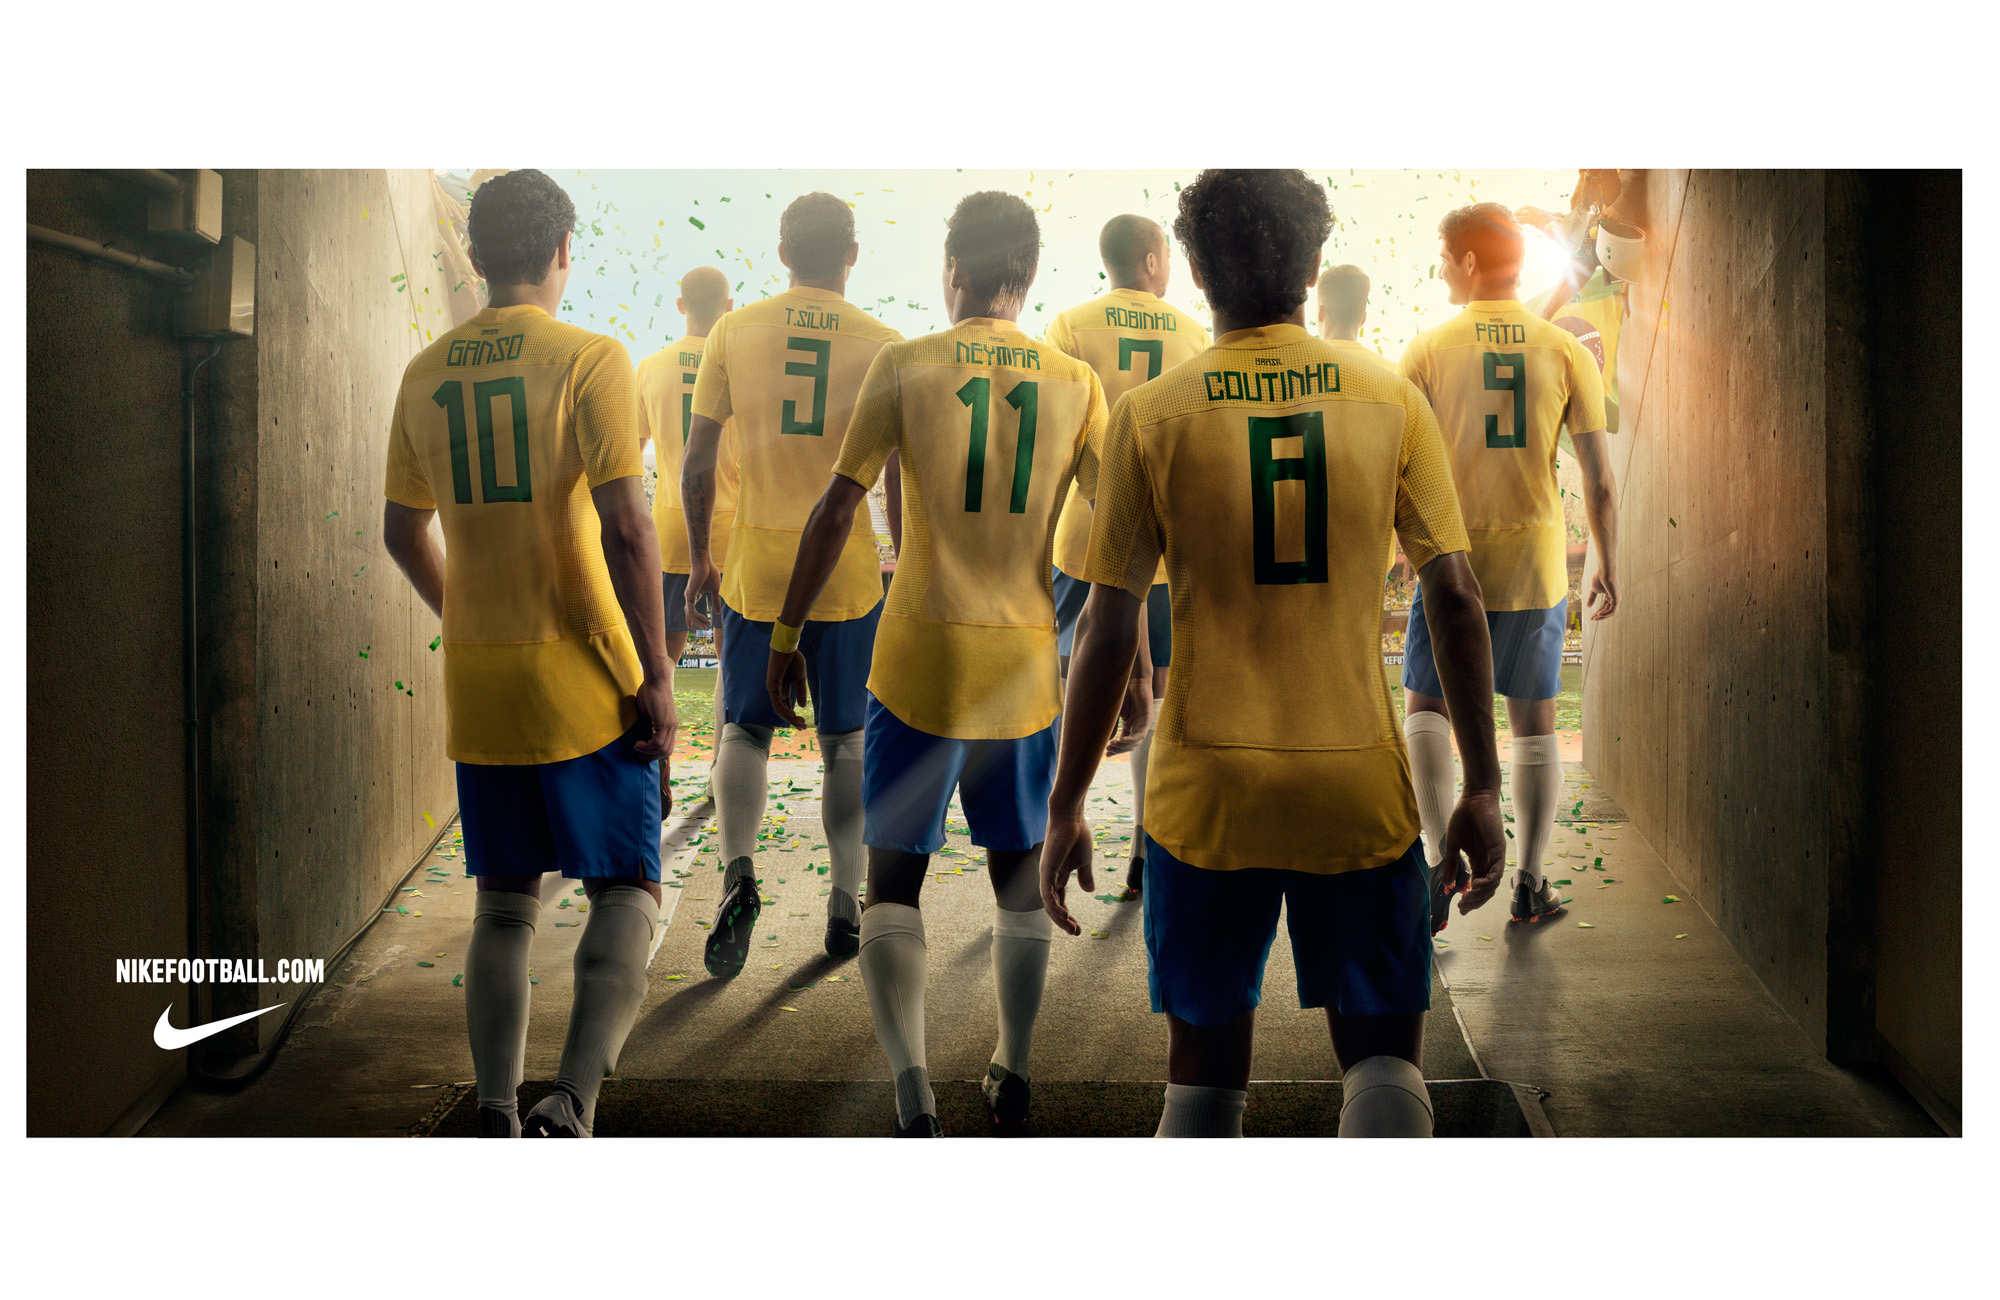 Nike Brazil - 2 of 2